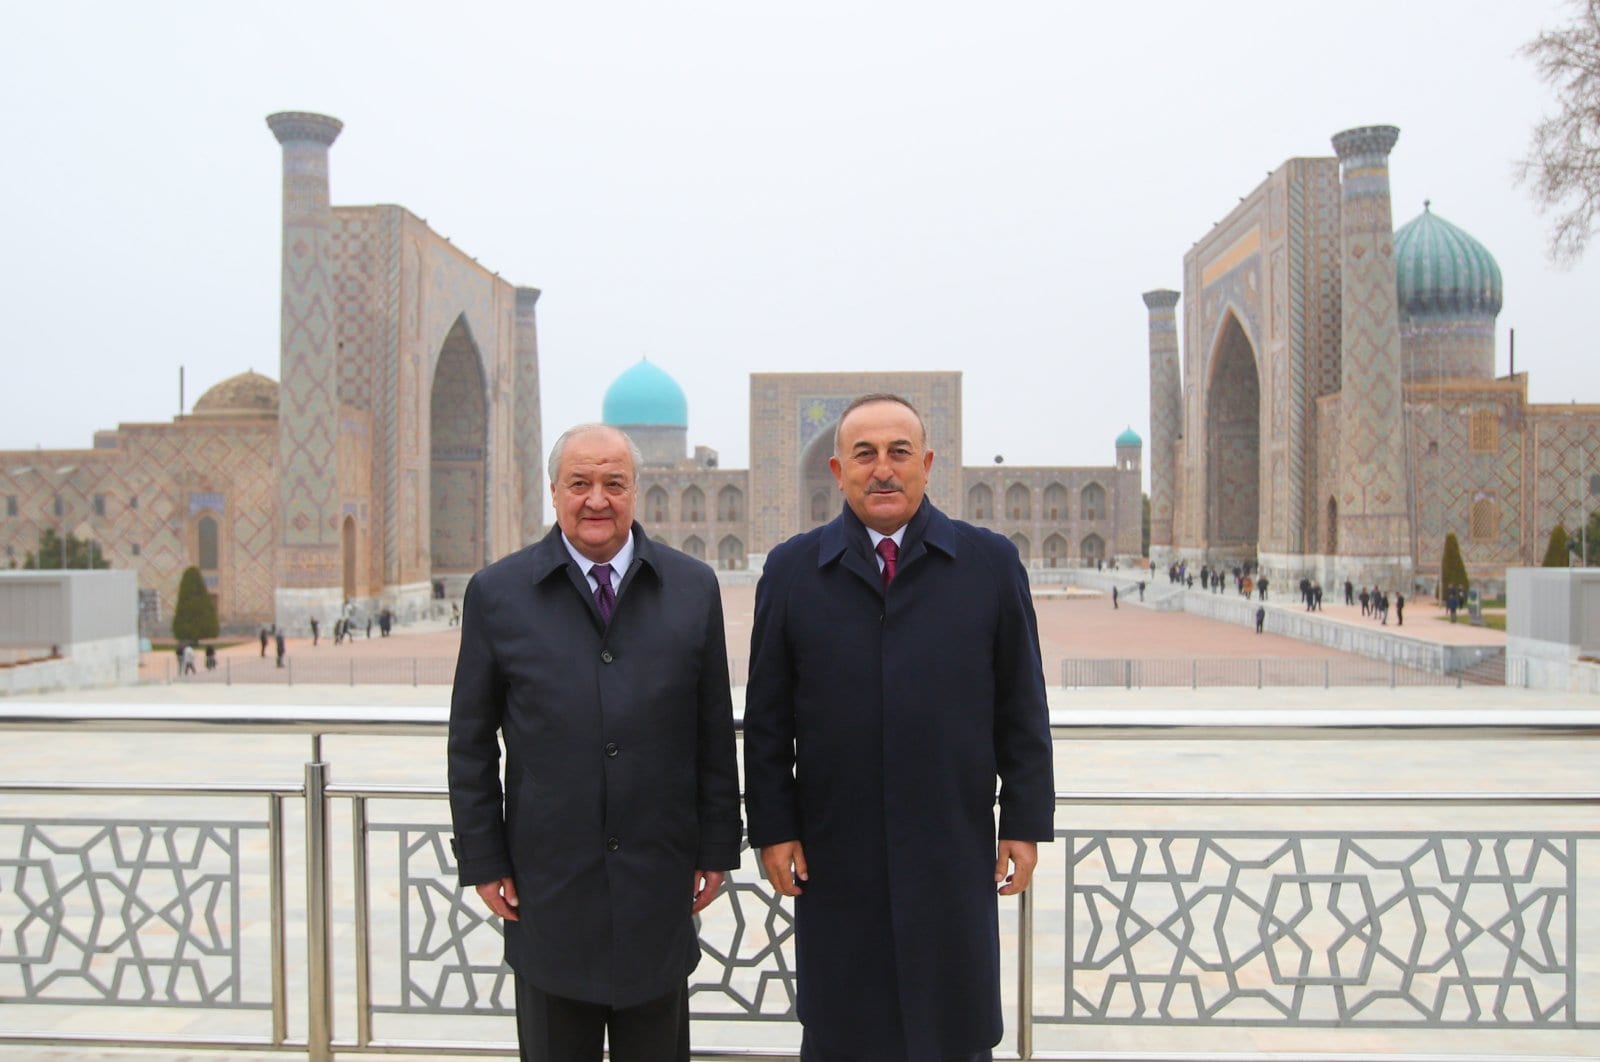 Çavuşoğlu: Turkey&#8217;s ties with Turkmenistan, Uzbekistan &#8216;friendly, result-oriented&#8217;